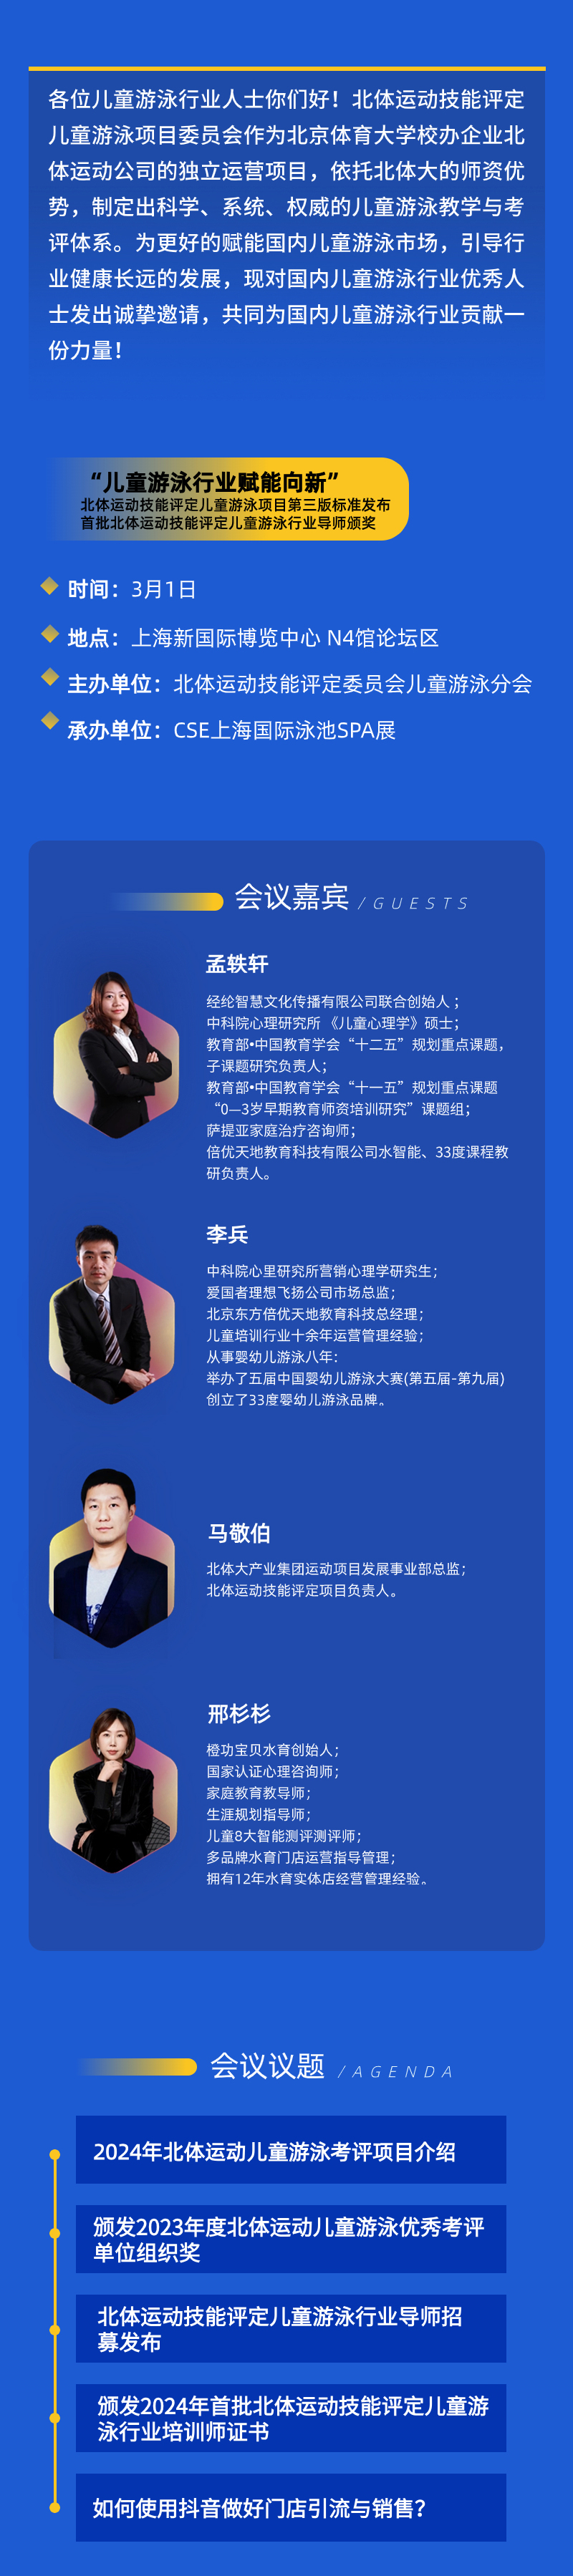 IT互联网会议活动宣传流程科技感长图海报 (3).jpg